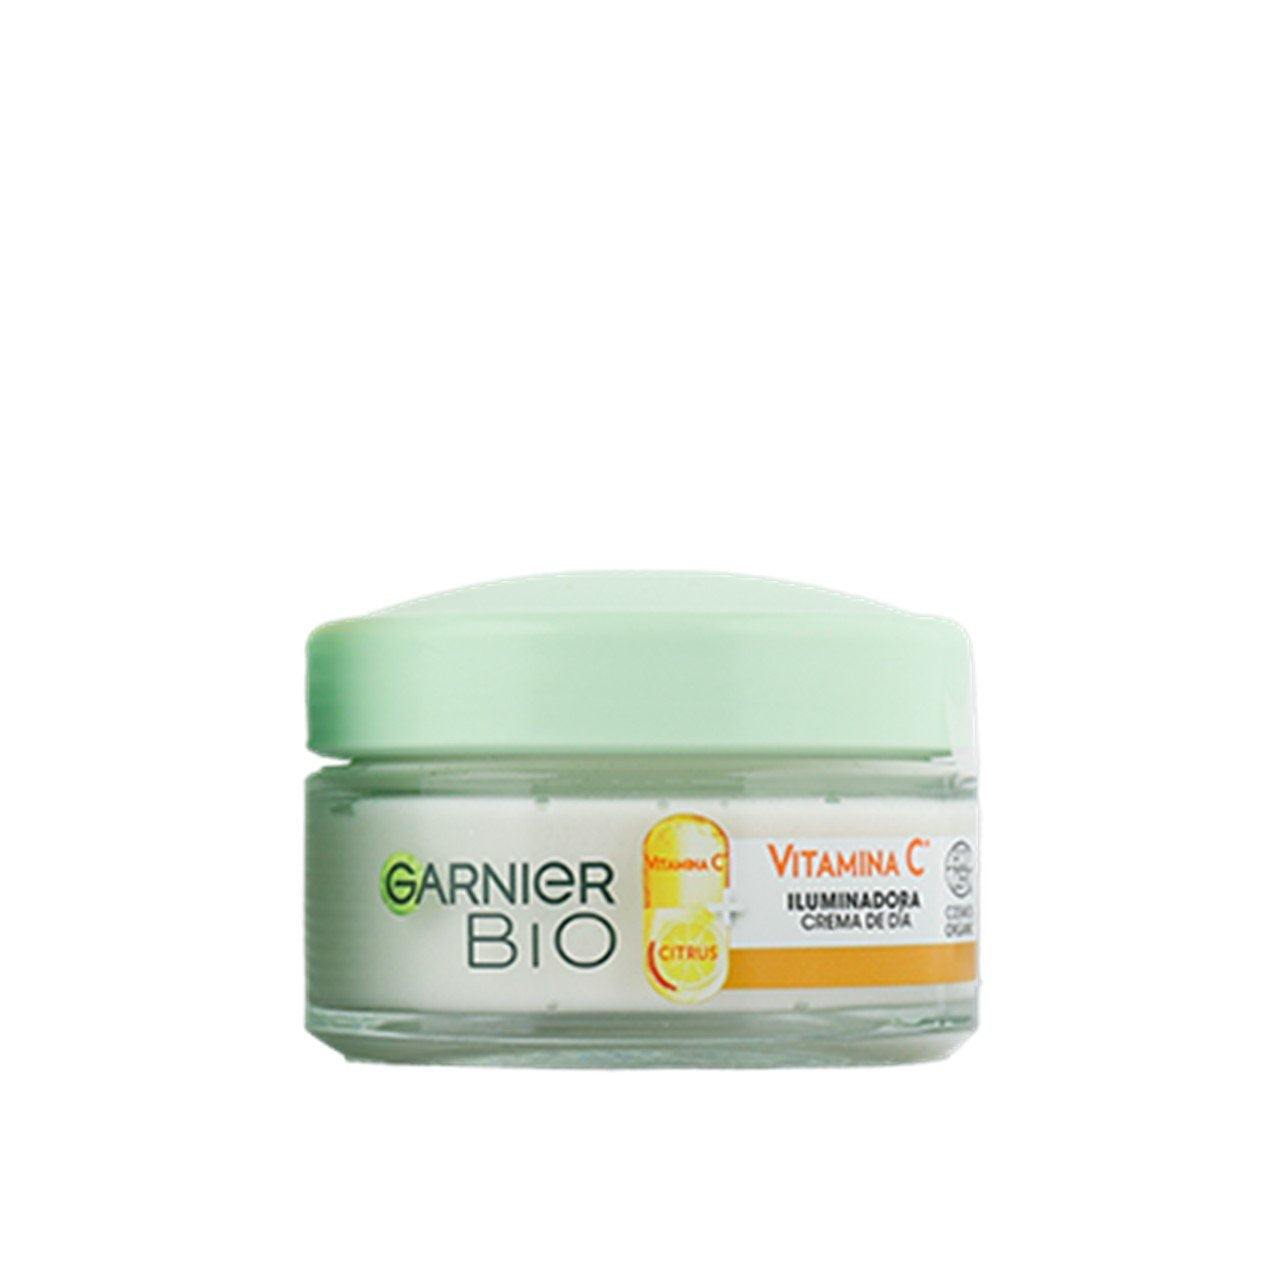 Garnier Bio Vitamina C Creme de Dia Iluminador 50ml